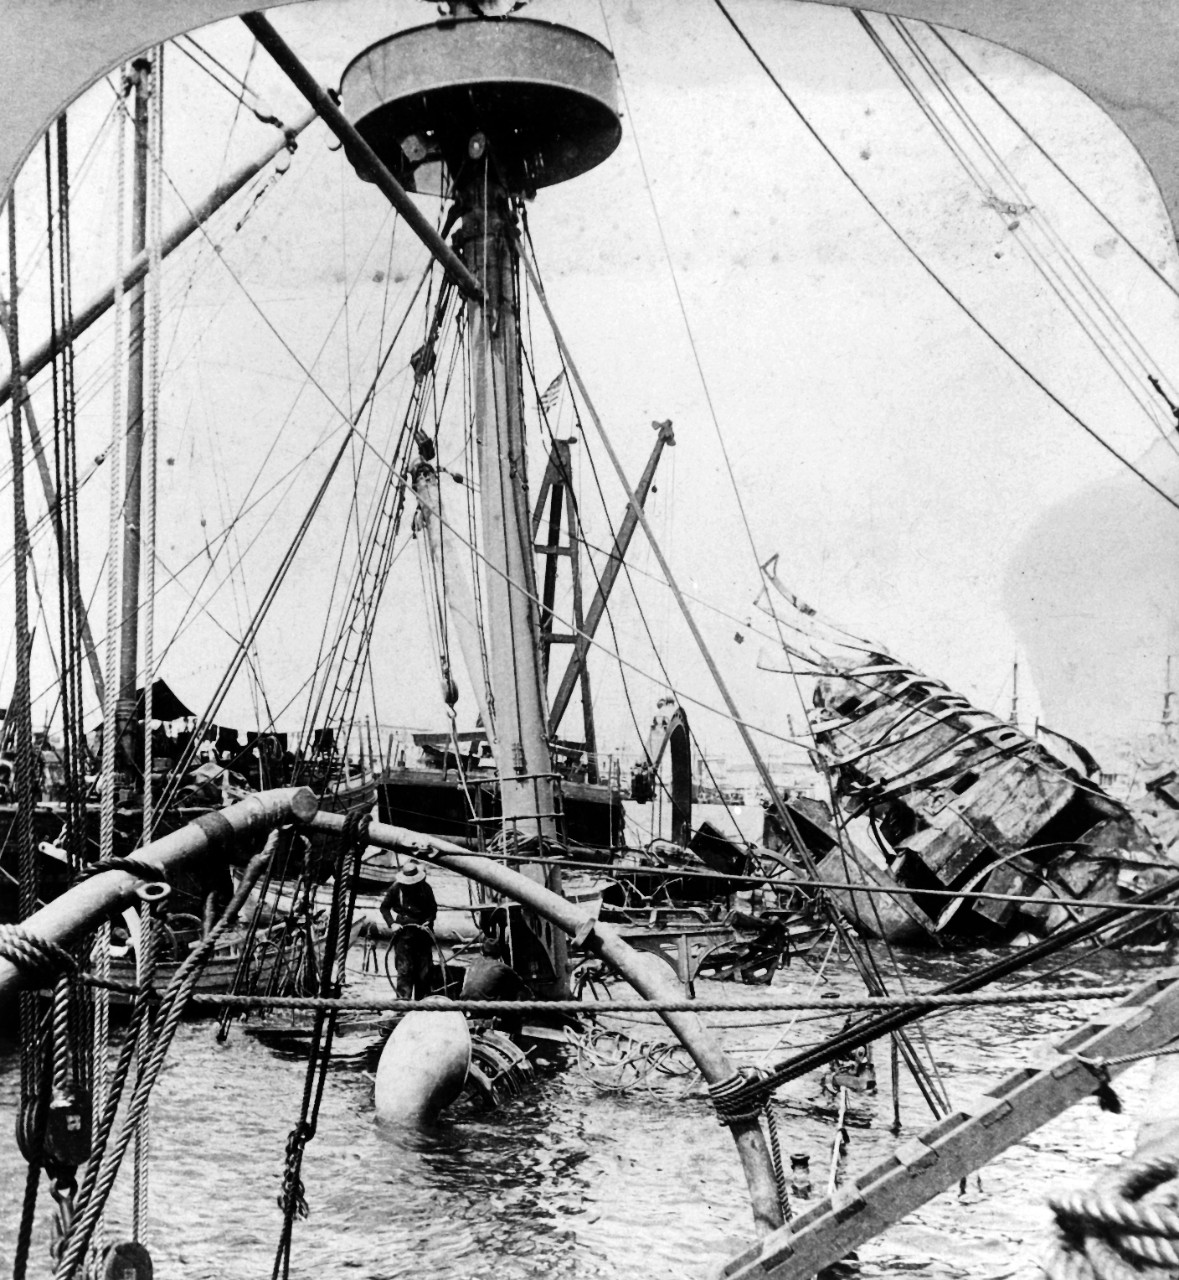 The wrecked battleship MAINE (USS MAINE, 1895-1898)